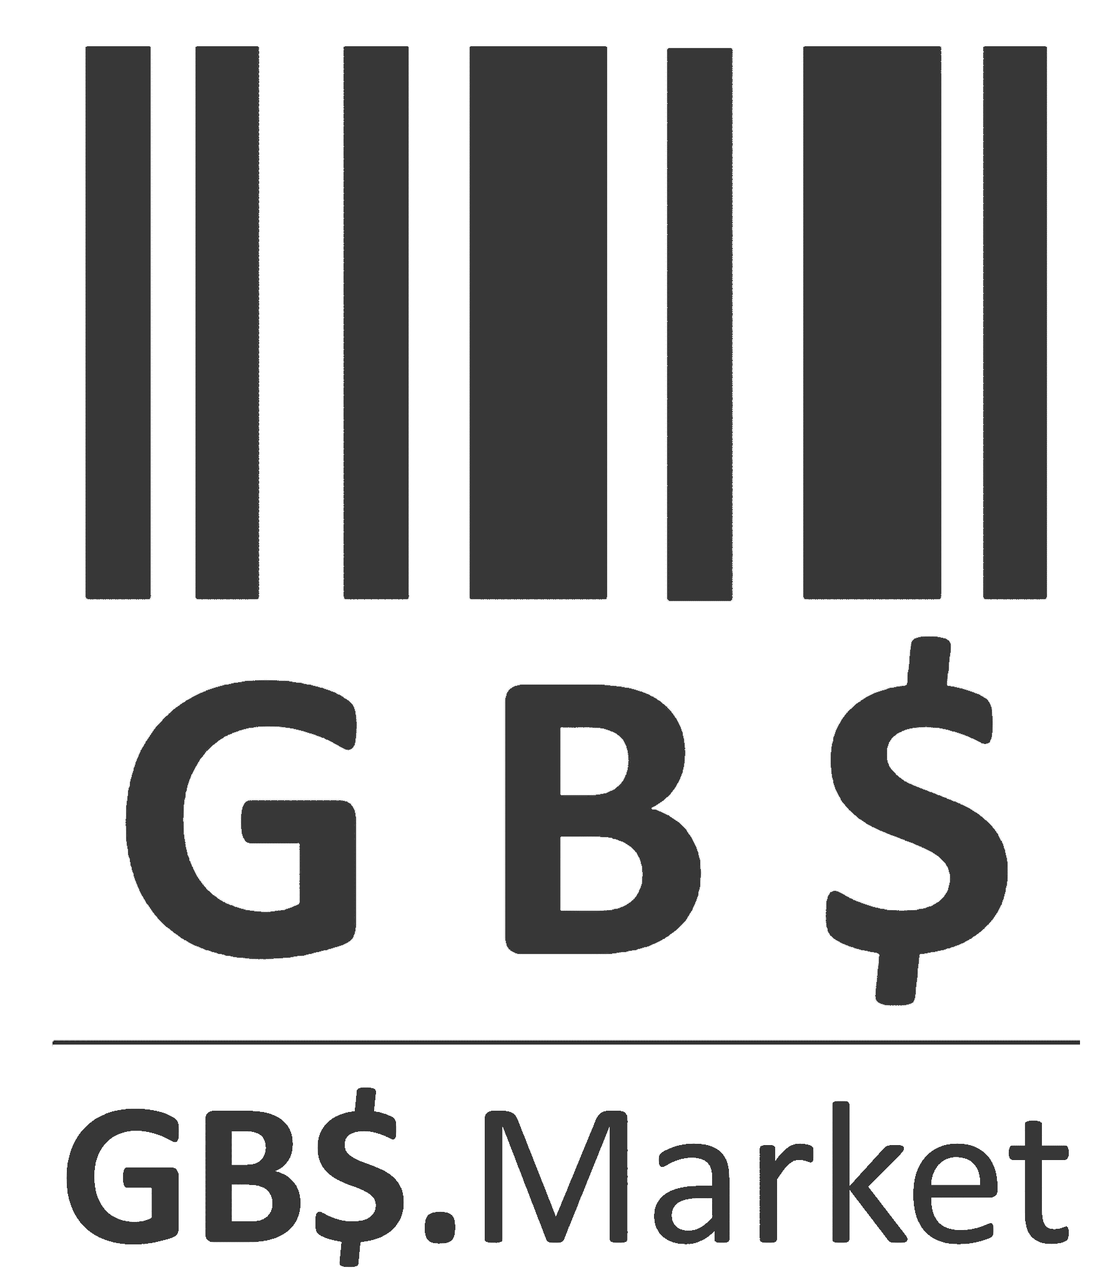 GBS. Market 6- новая версия GBS Market уже доступна!